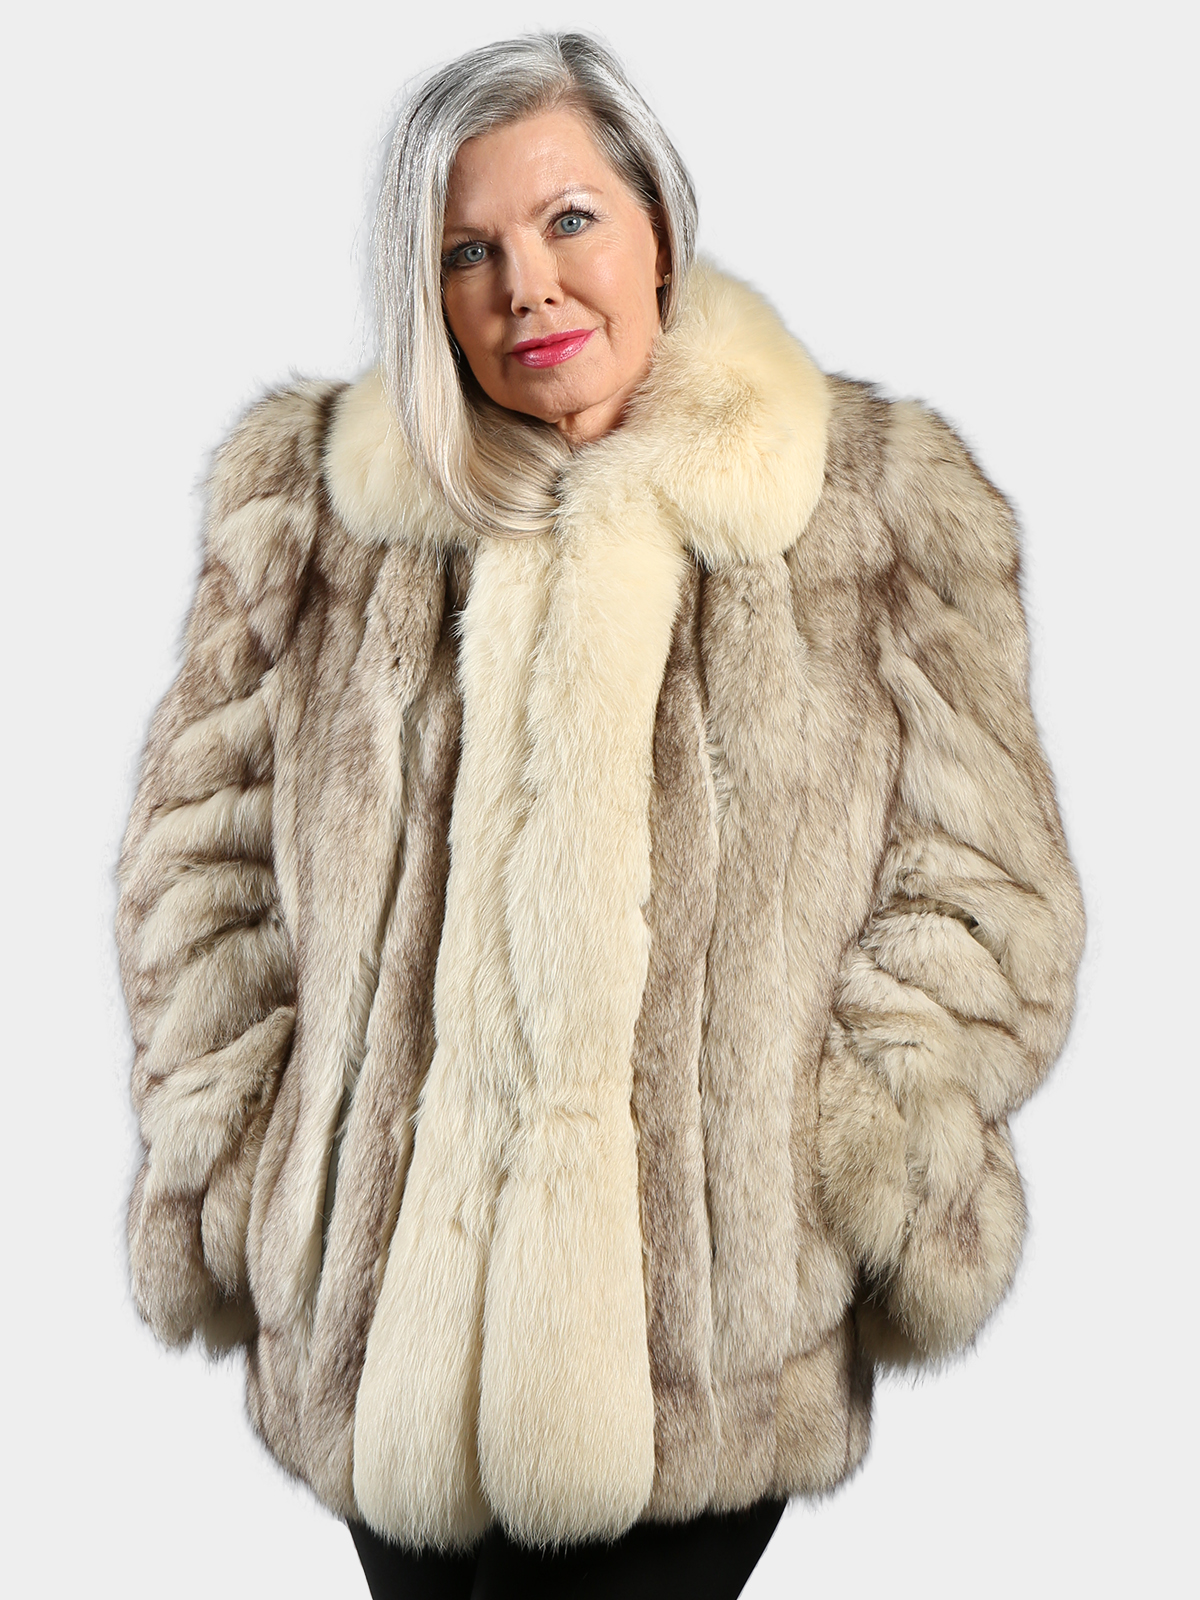 Blue Fox Fur Jacket (Women's Small) - Estate Furs